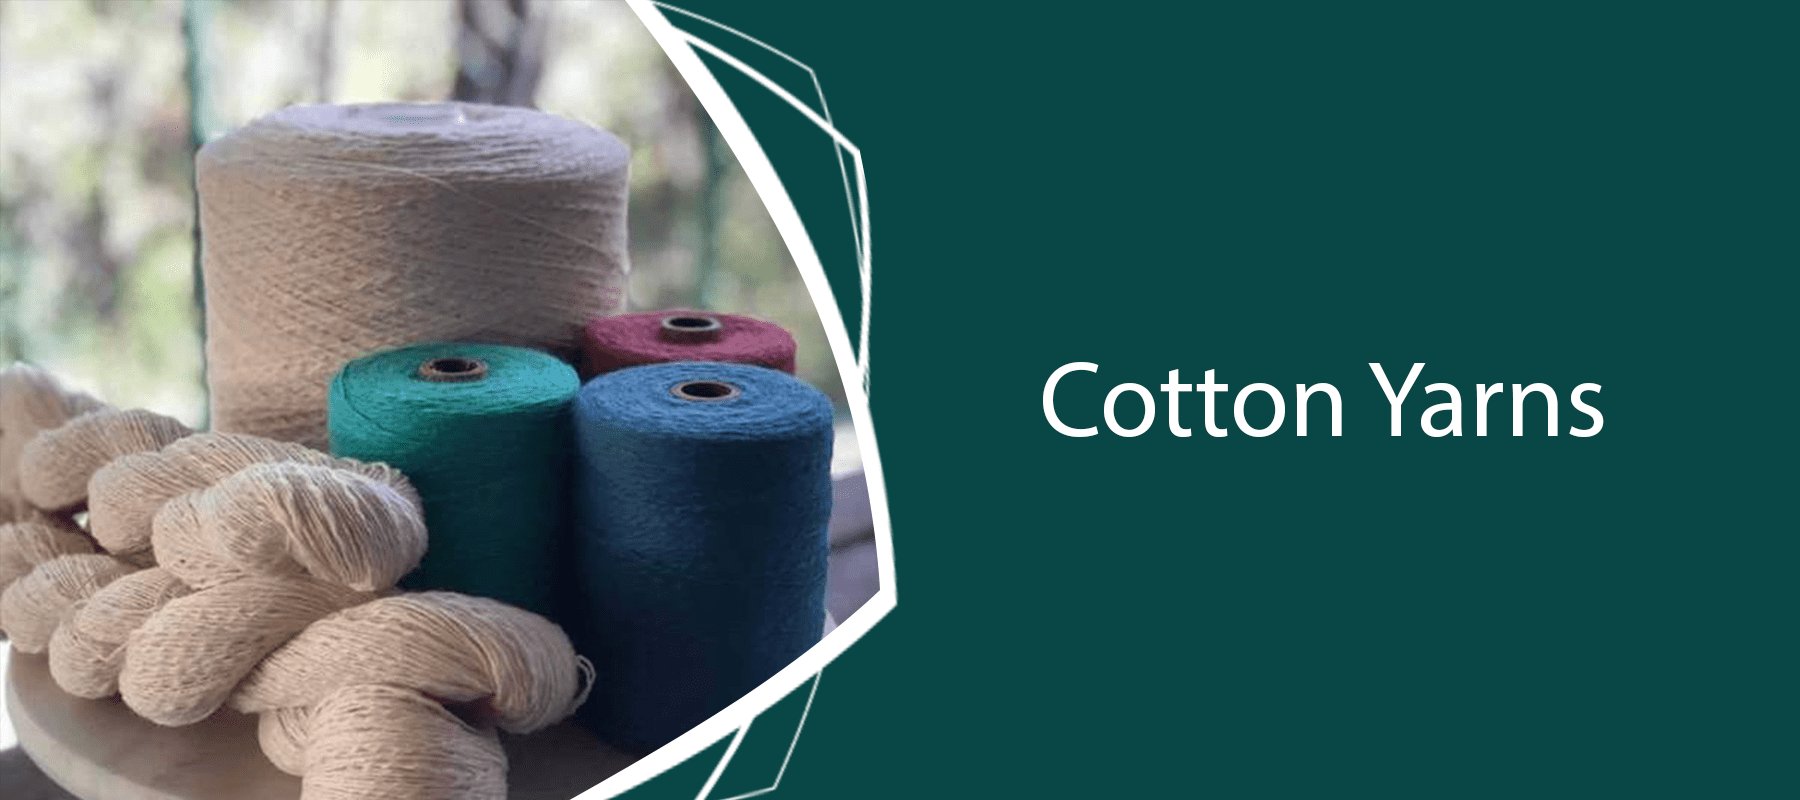 Cotton Yarn Australia: Knitting, Crochet & Weaving Handicraft Art - Thread Collective Australia 